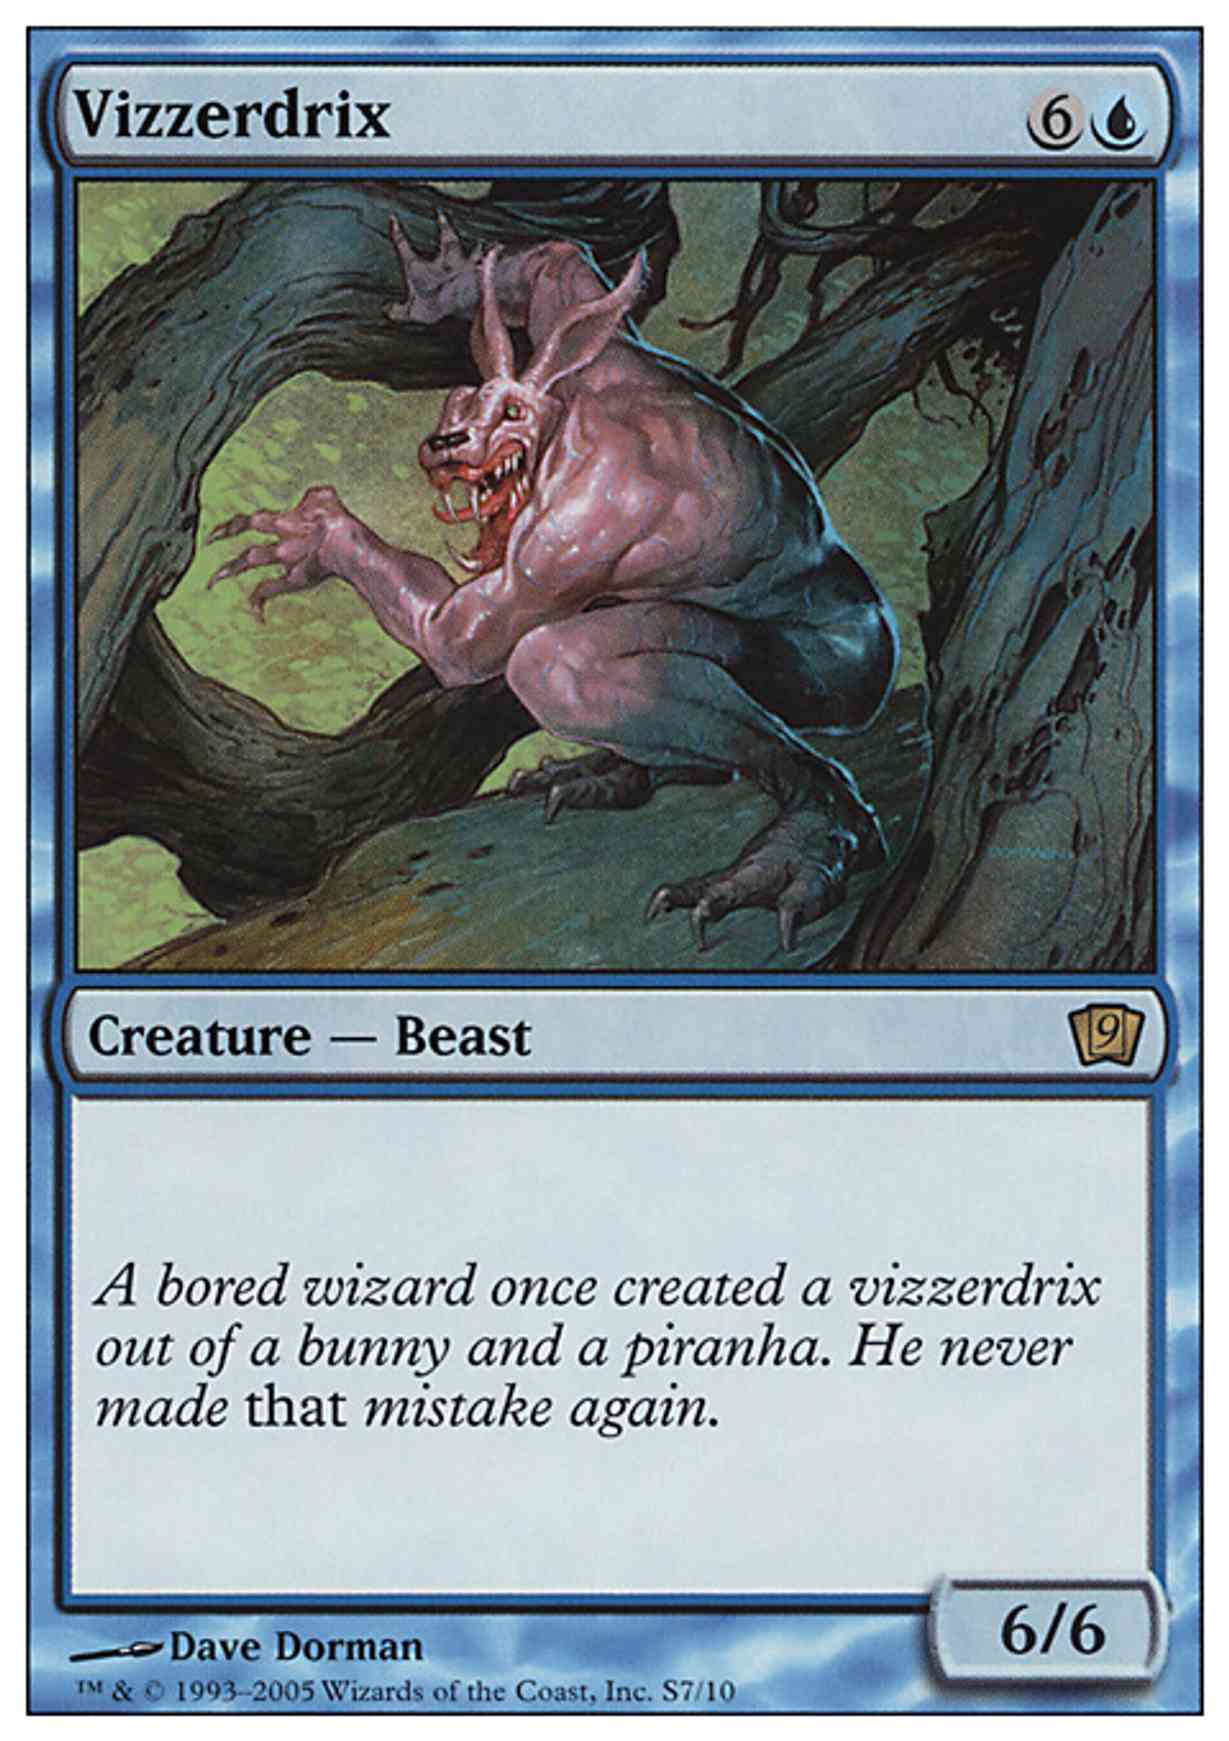 Vizzerdrix magic card front